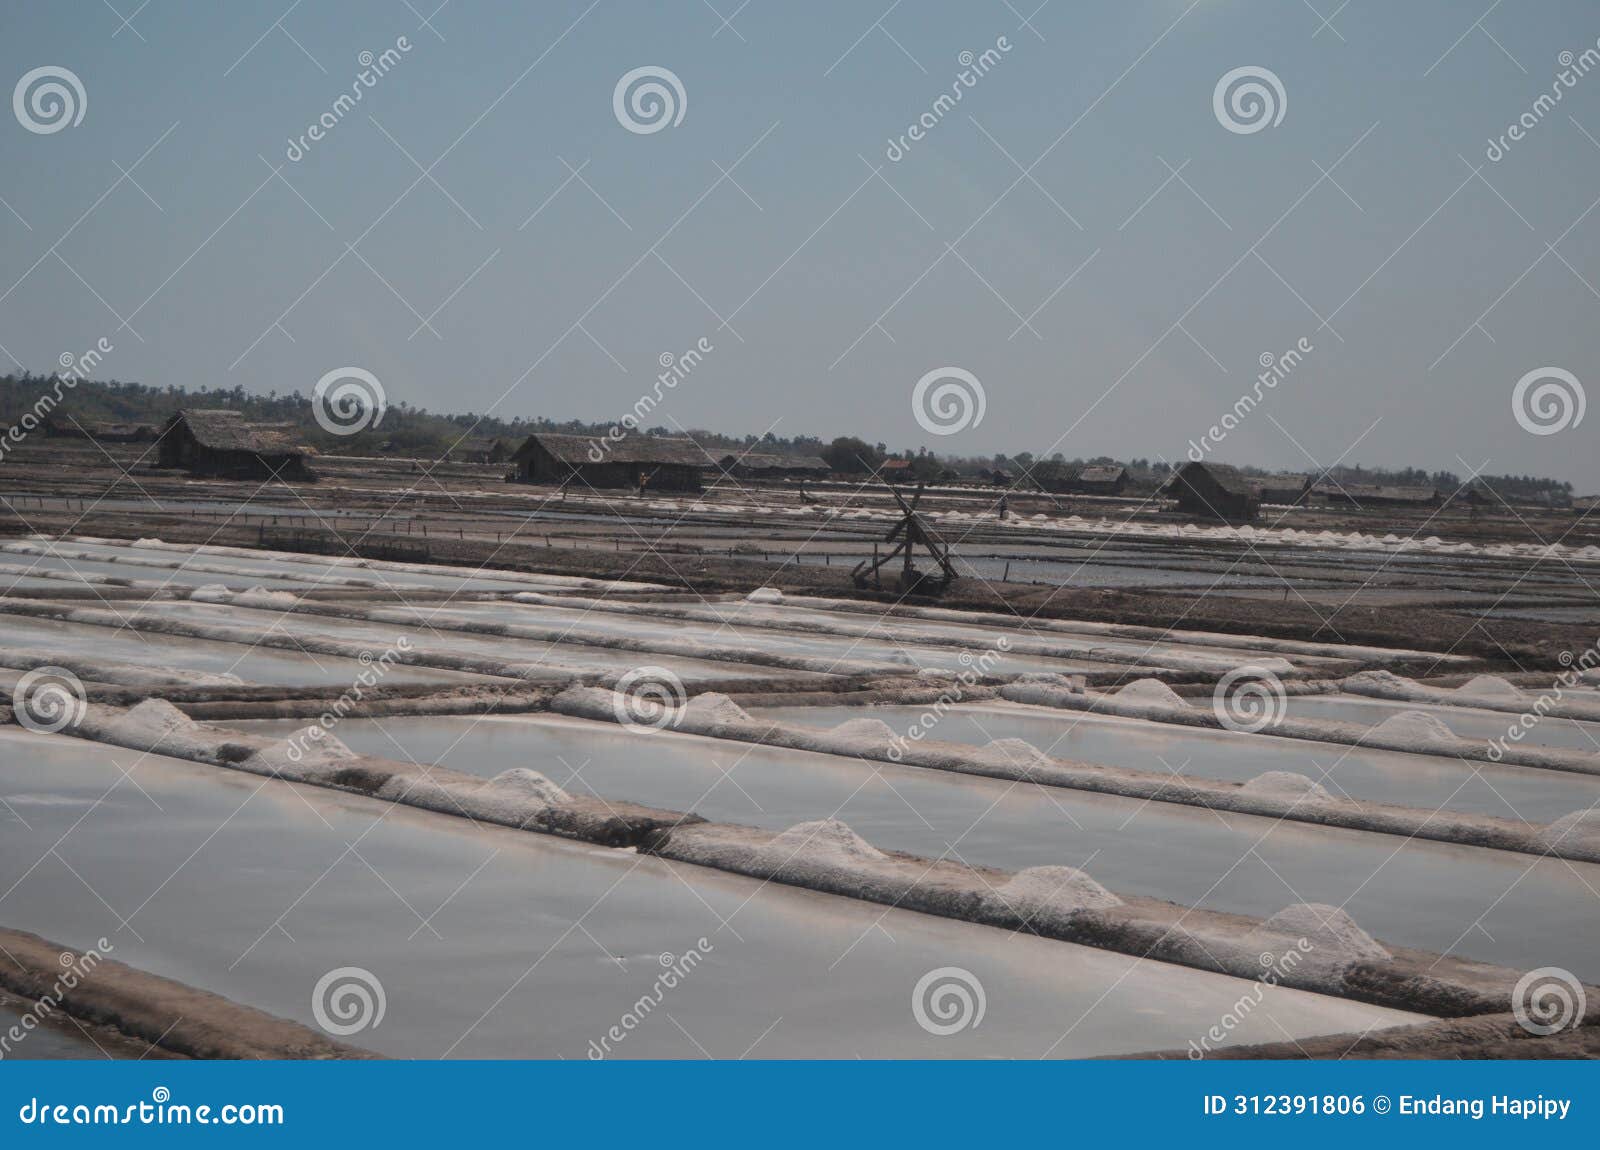 salt field in jeneponto south sulawesi indonesia